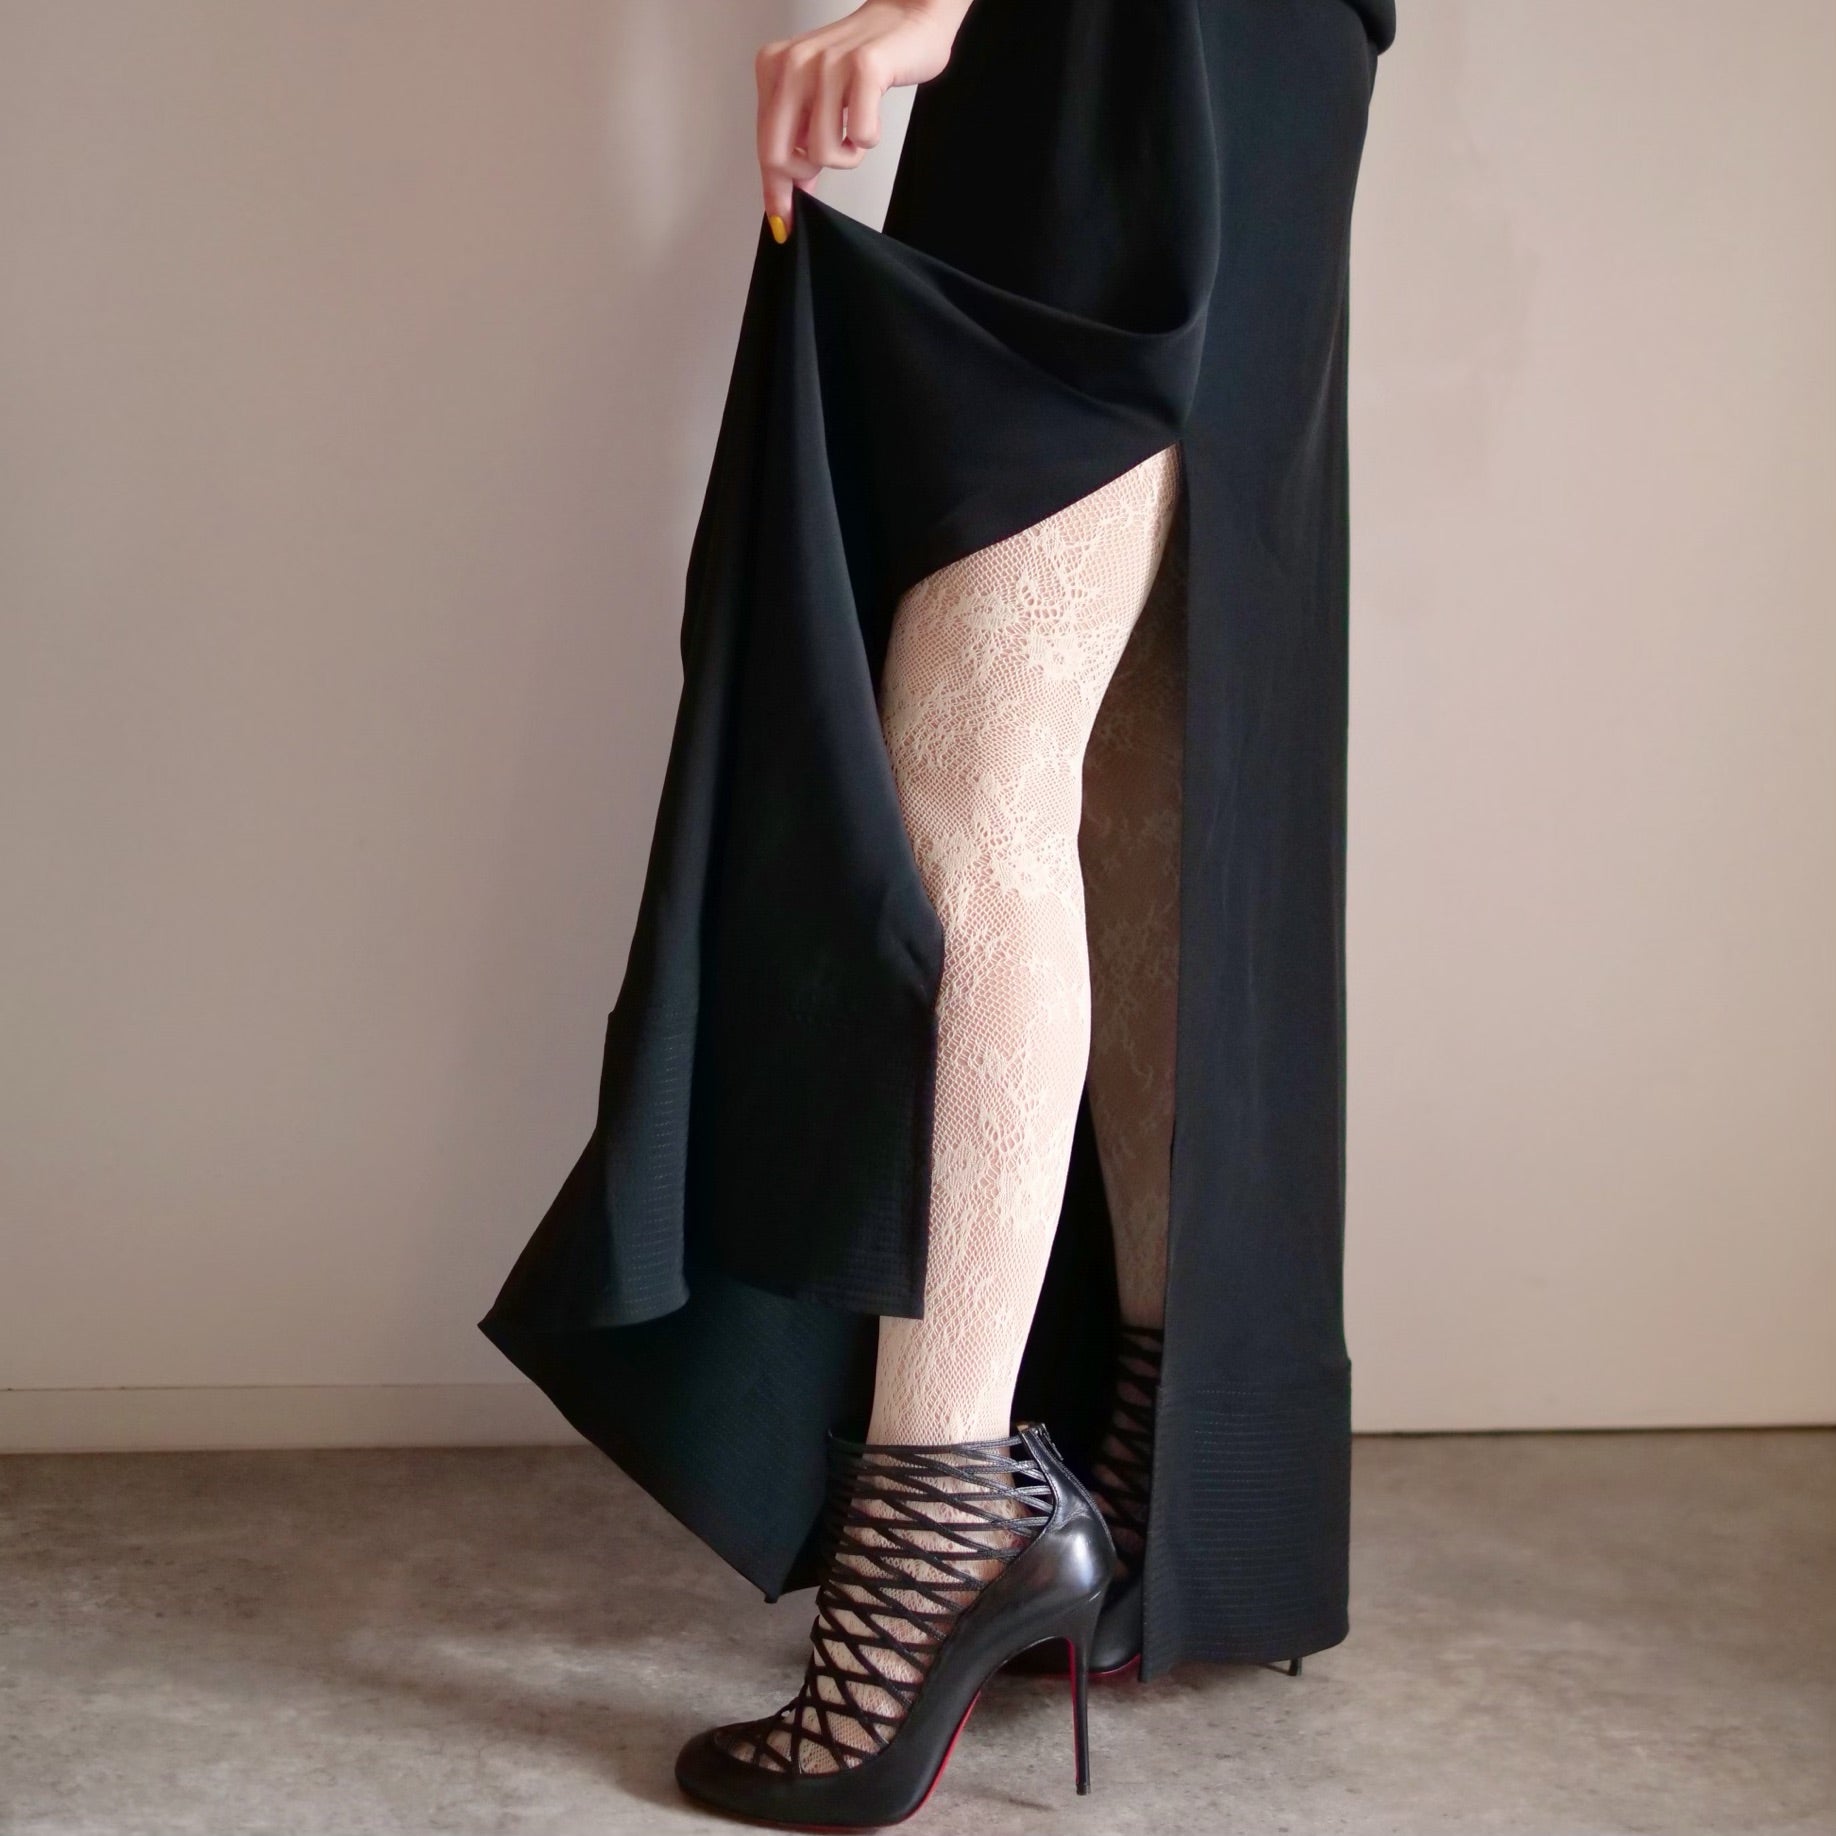 [OLD&VINTAGE] Paco Rabanne メタルデザインロングドレス